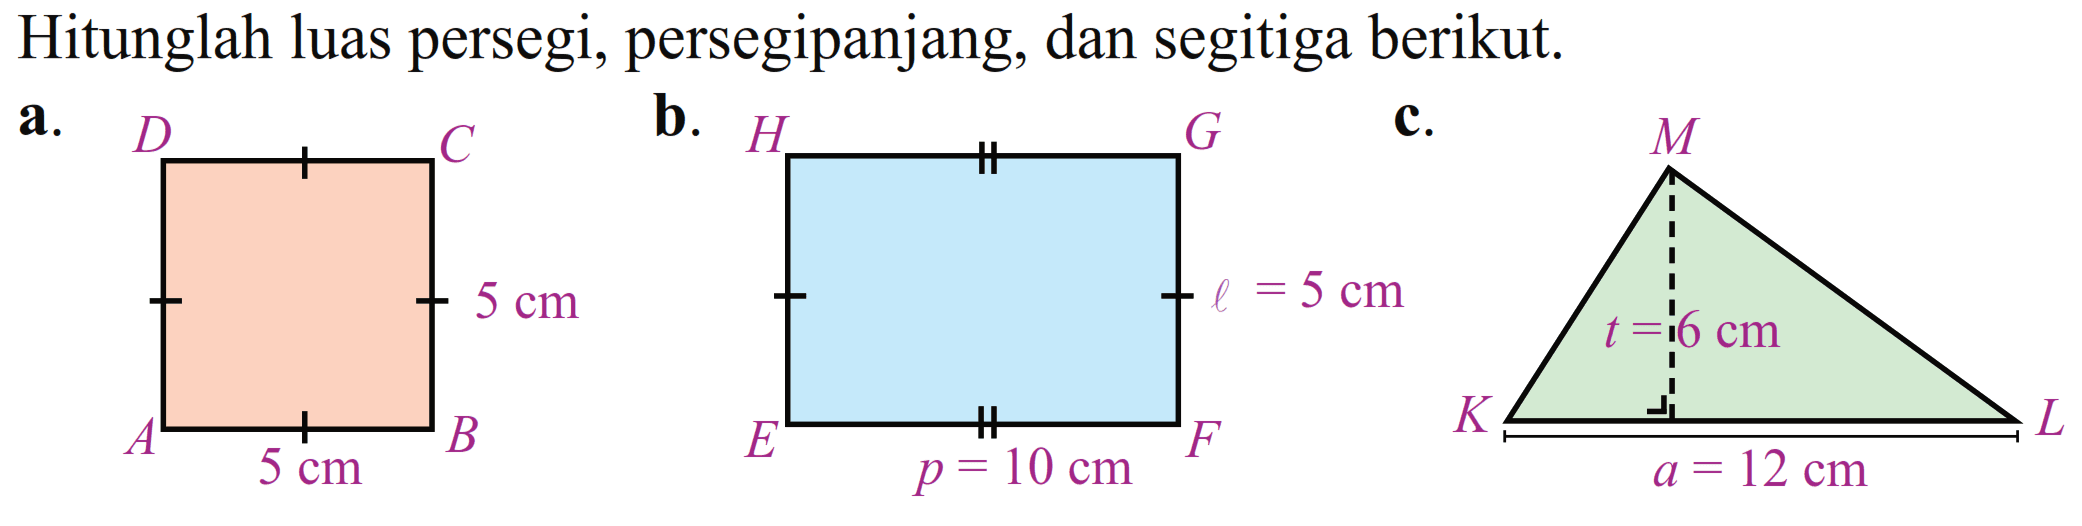 Hitunglah luas persegi, persegipanjang, dan segitiga berikut. a. ABCD 5 cm 5 cm B. EFGH l = 5 cm p = 10 cm c. KLMa = 12 cm t = 6 cm